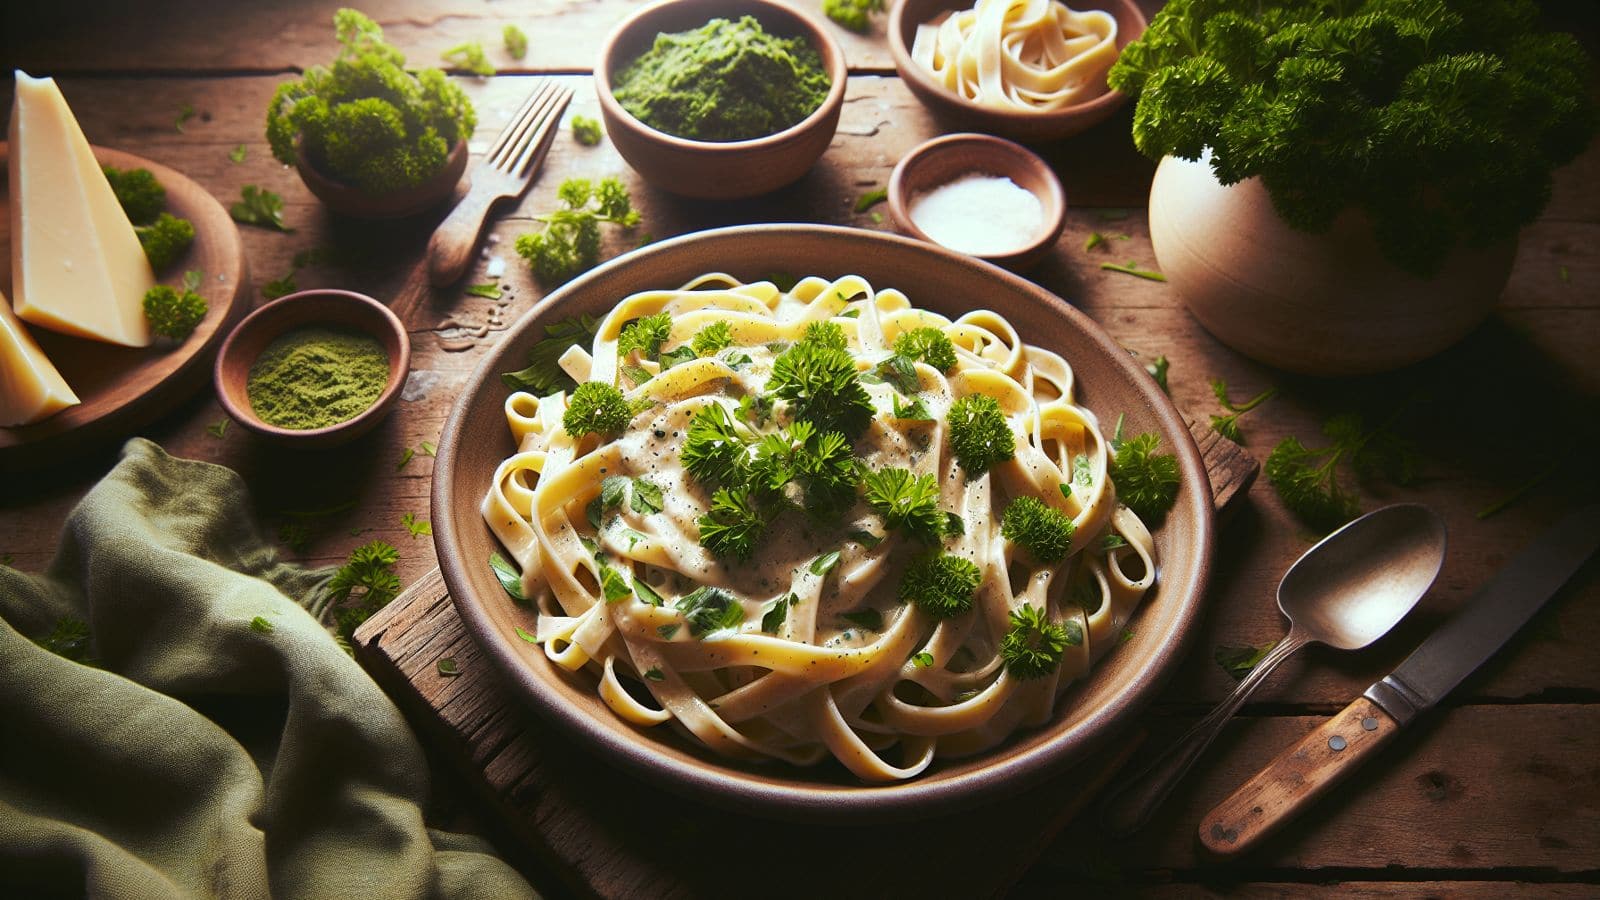 Recipe: Make this delicious vegan fettuccine Alfredo pasta at home 